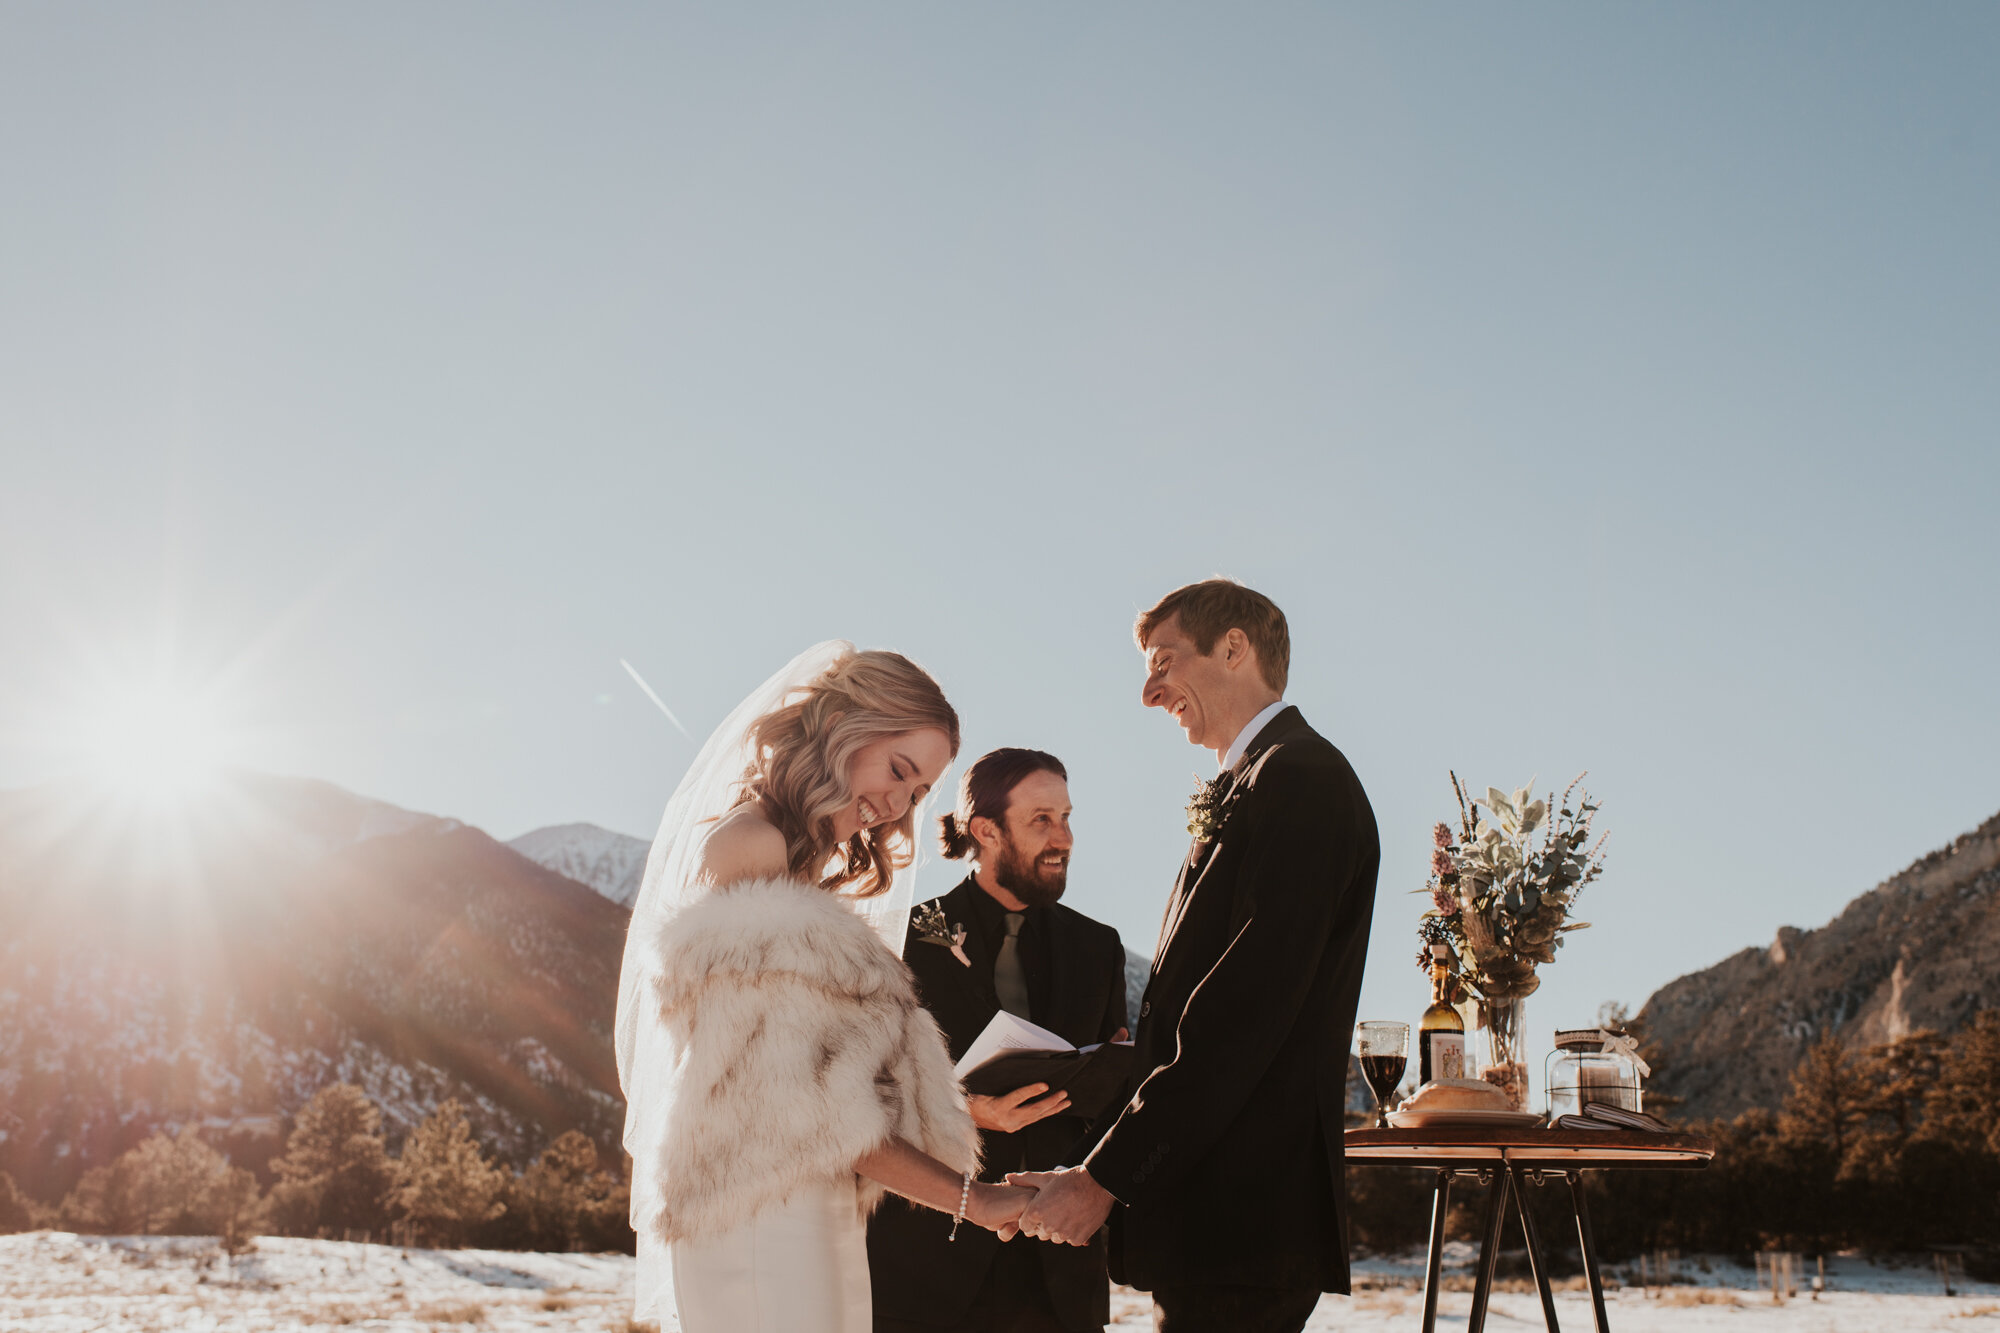 Buena Vista Colorado Wedding Photographer